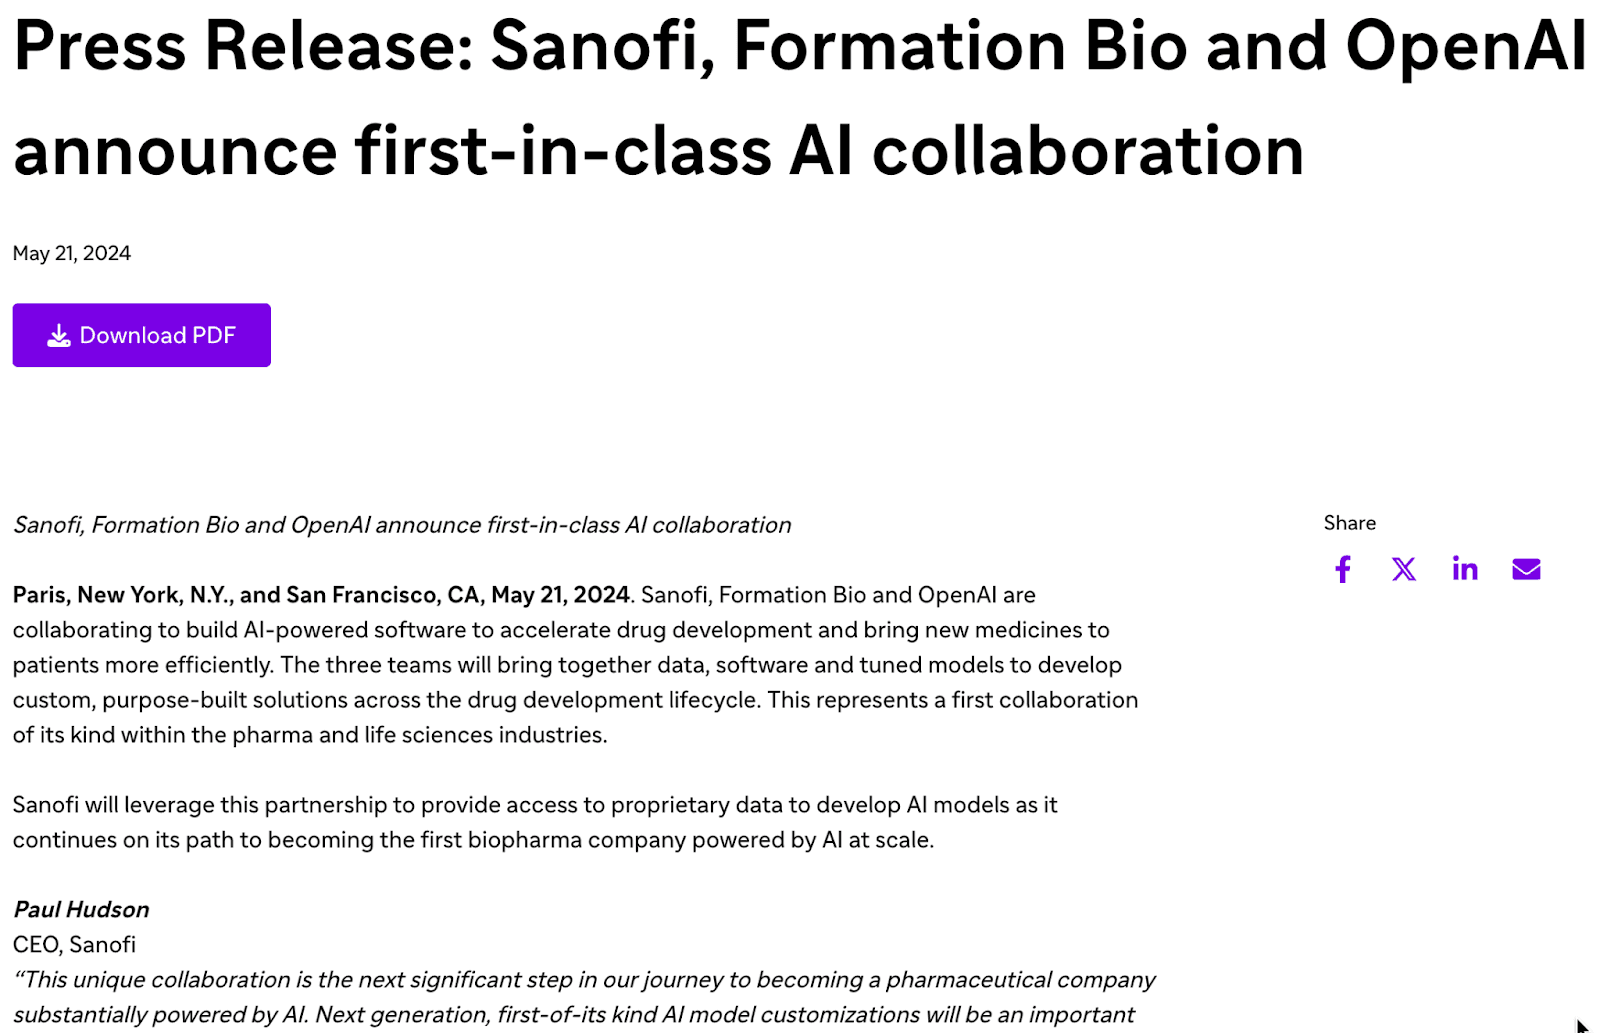 Example of partnership announcement press release: Sanofi, Formation Bio, and OpenAI